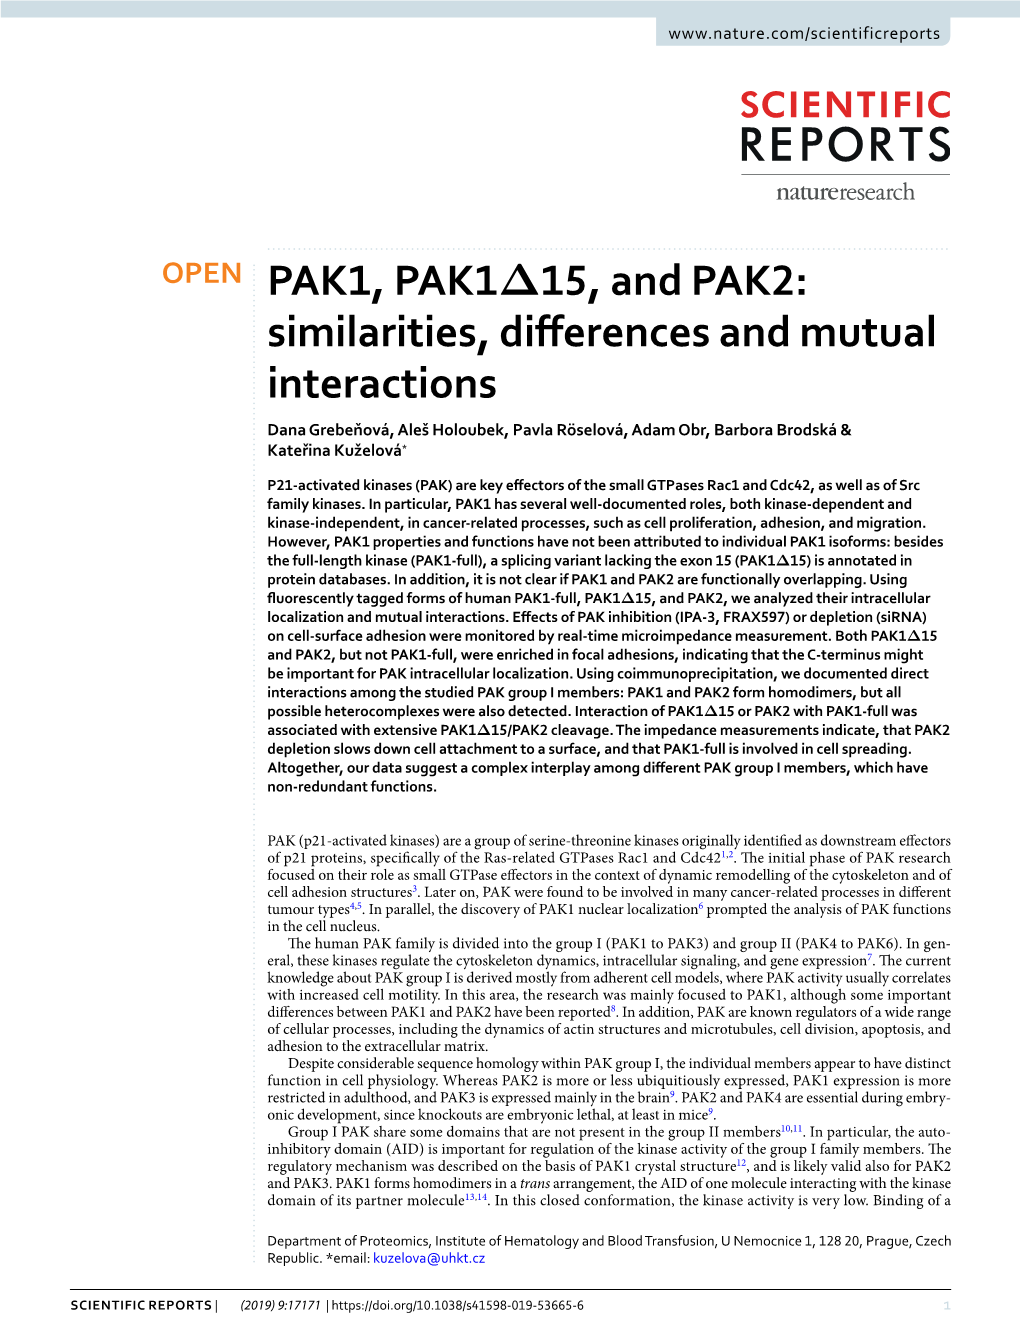 PAK1, PAK1Δ15, and PAK2: Similarities, Differences and Mutual